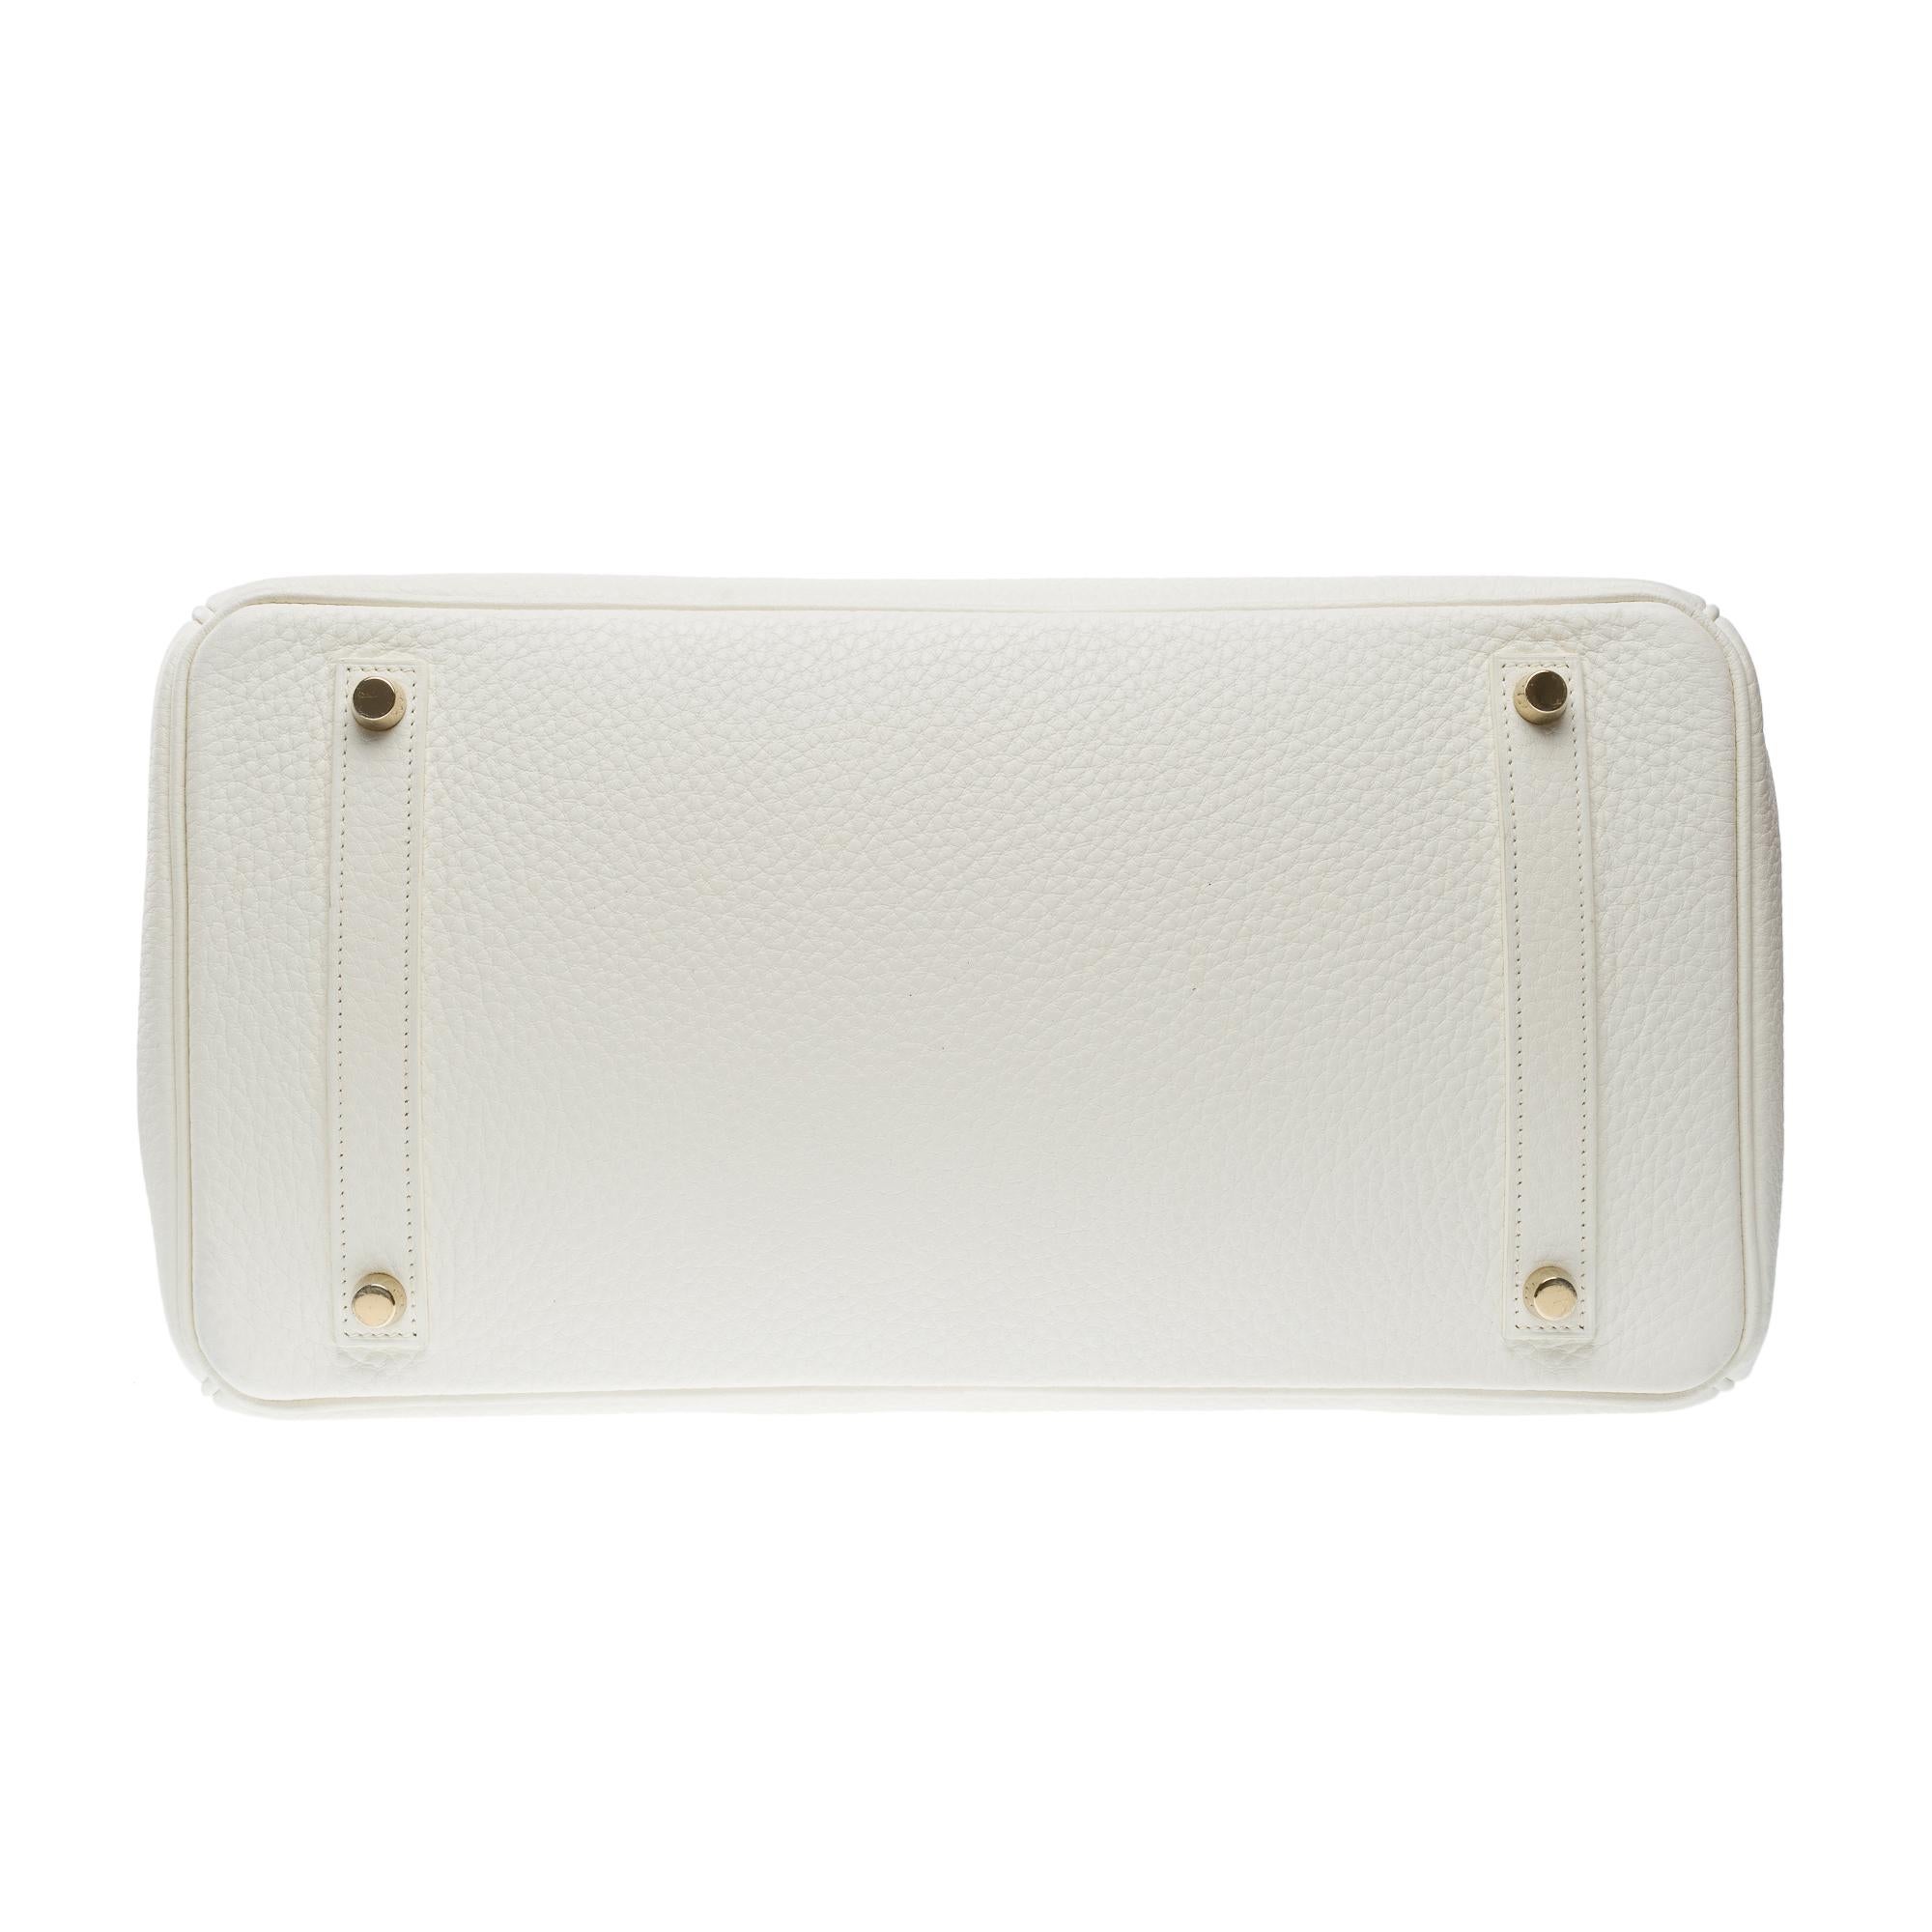 Stunning Hermès Birkin 35 handbag in White Taurillon Clemence leather, GHW 6